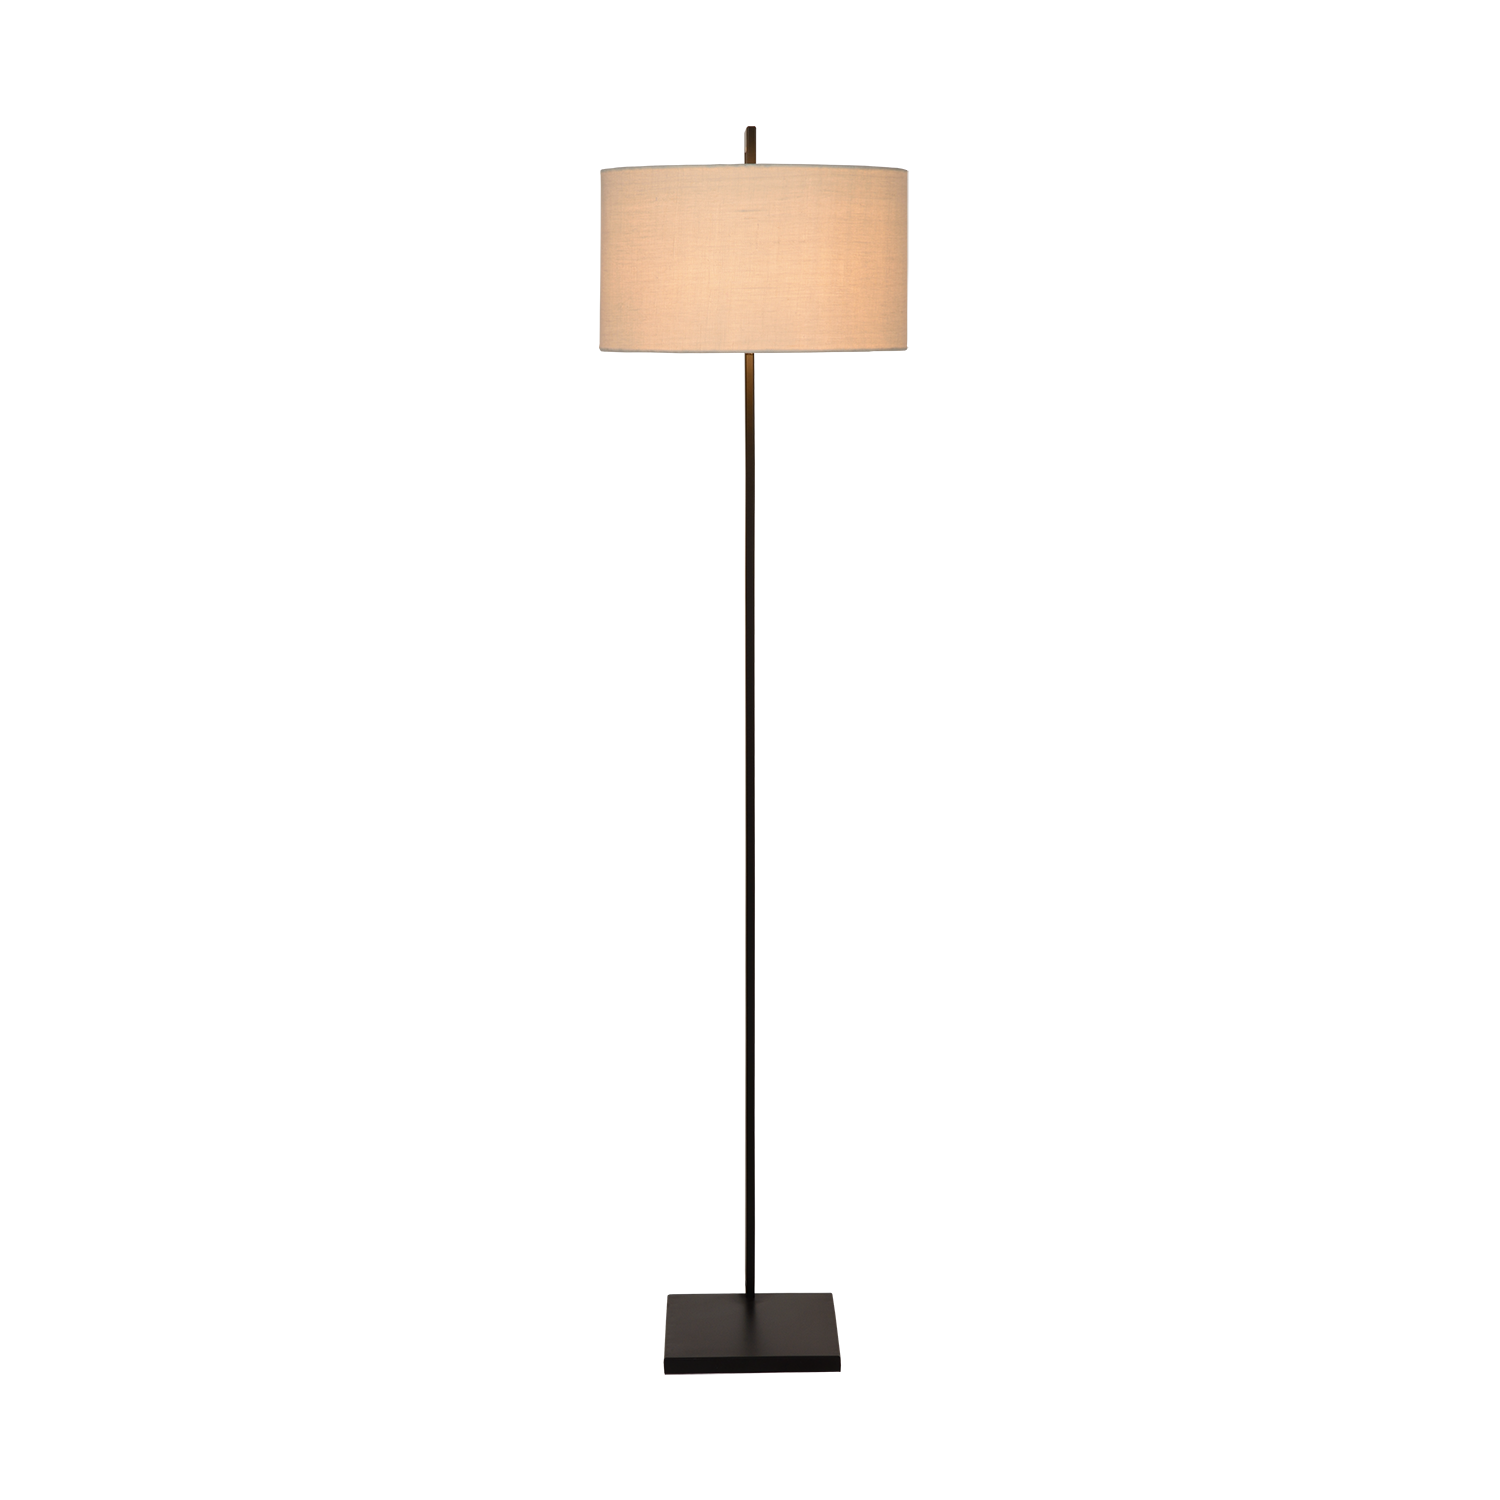 Floor lamp Bolivia | black